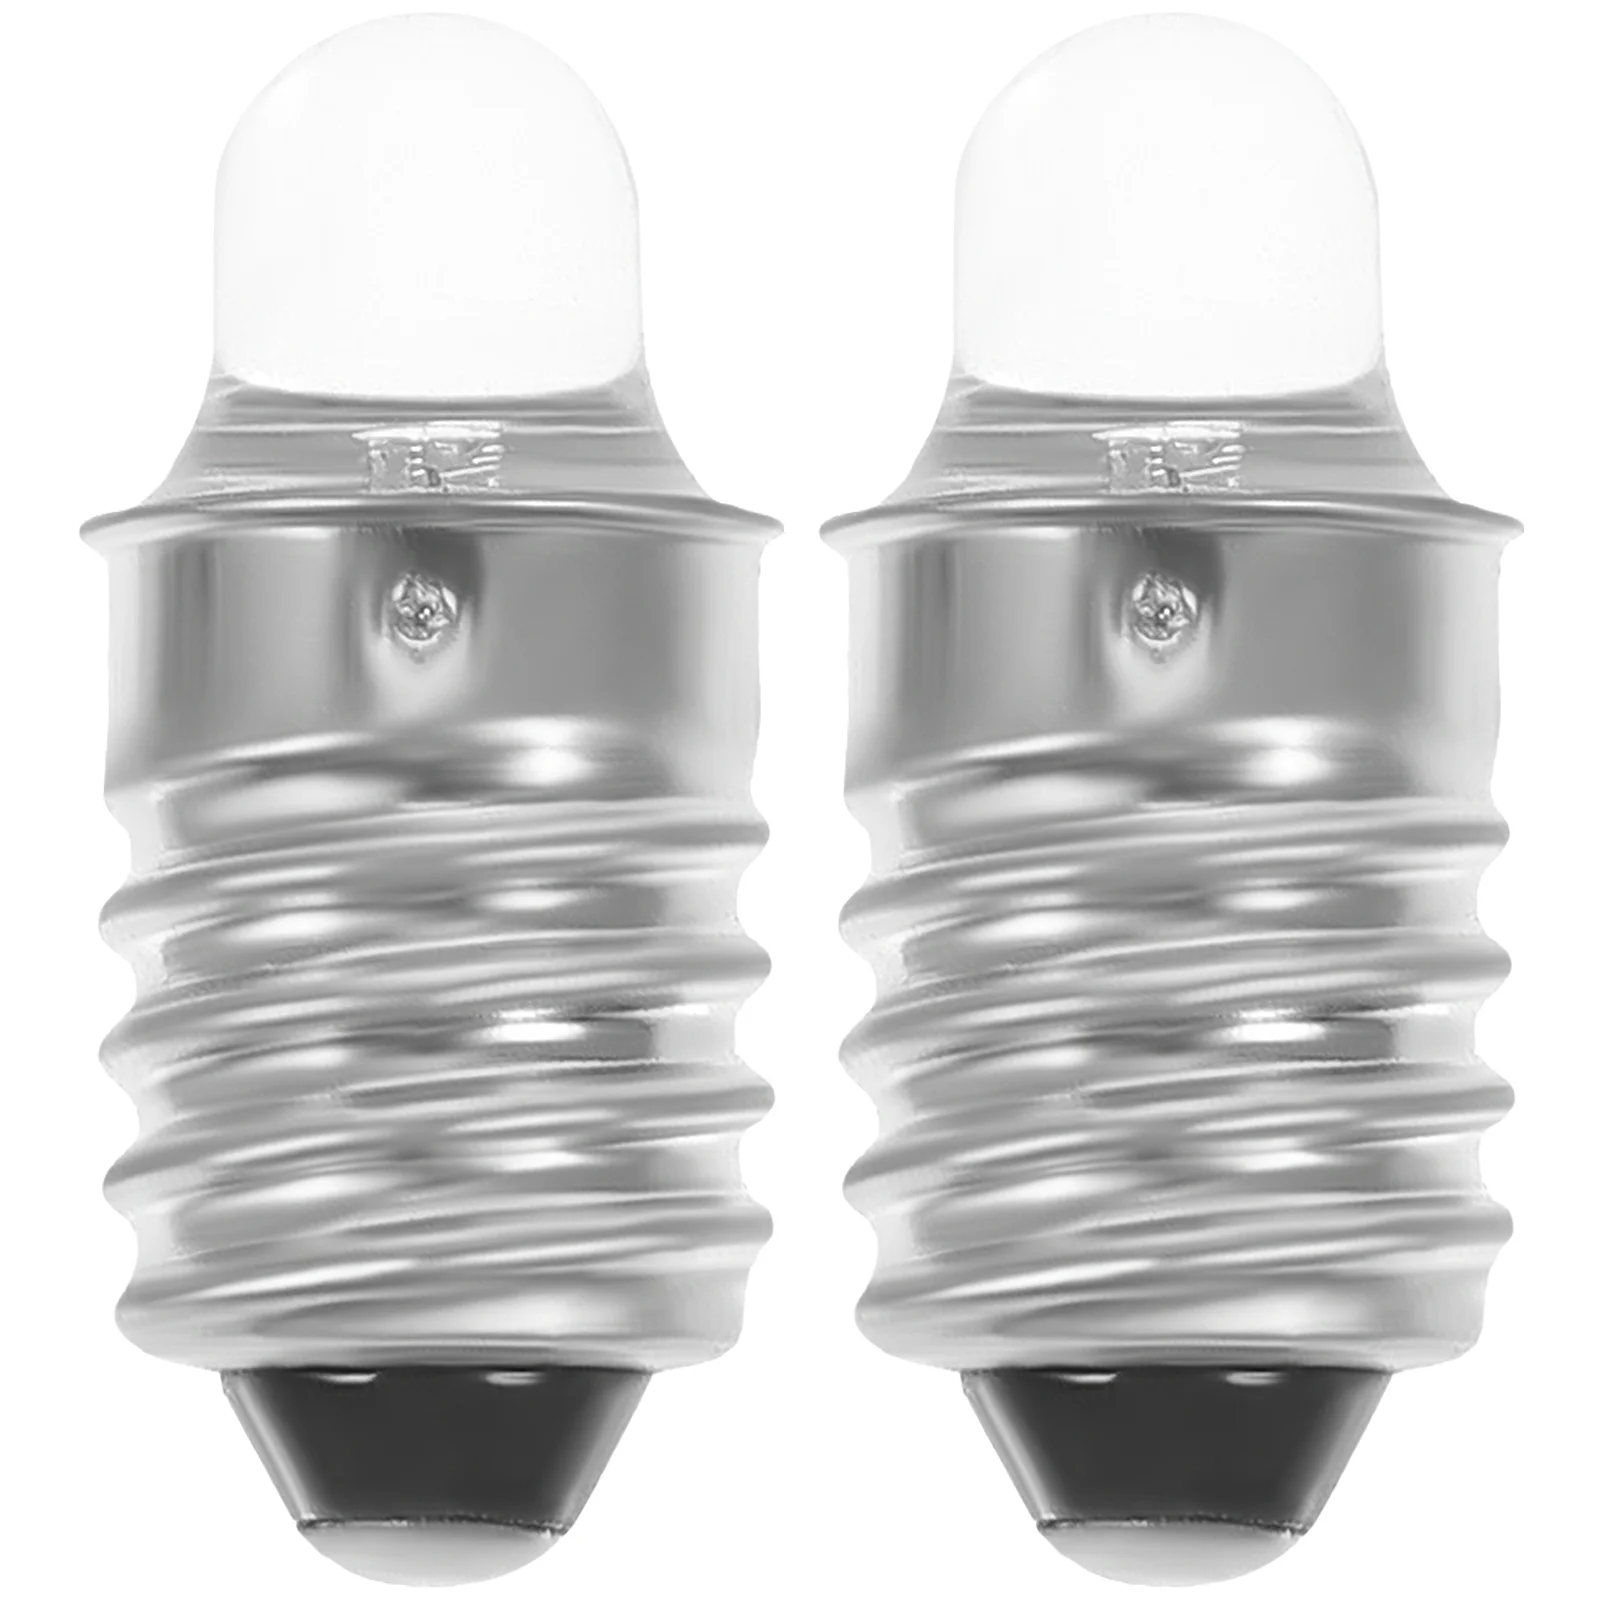 

Bulbs Bulb Light Flashlight Led Mini Tiny Replacement Miniature E10 Torch Base Screw Round Lights Changer High Ceilings 3V Volt